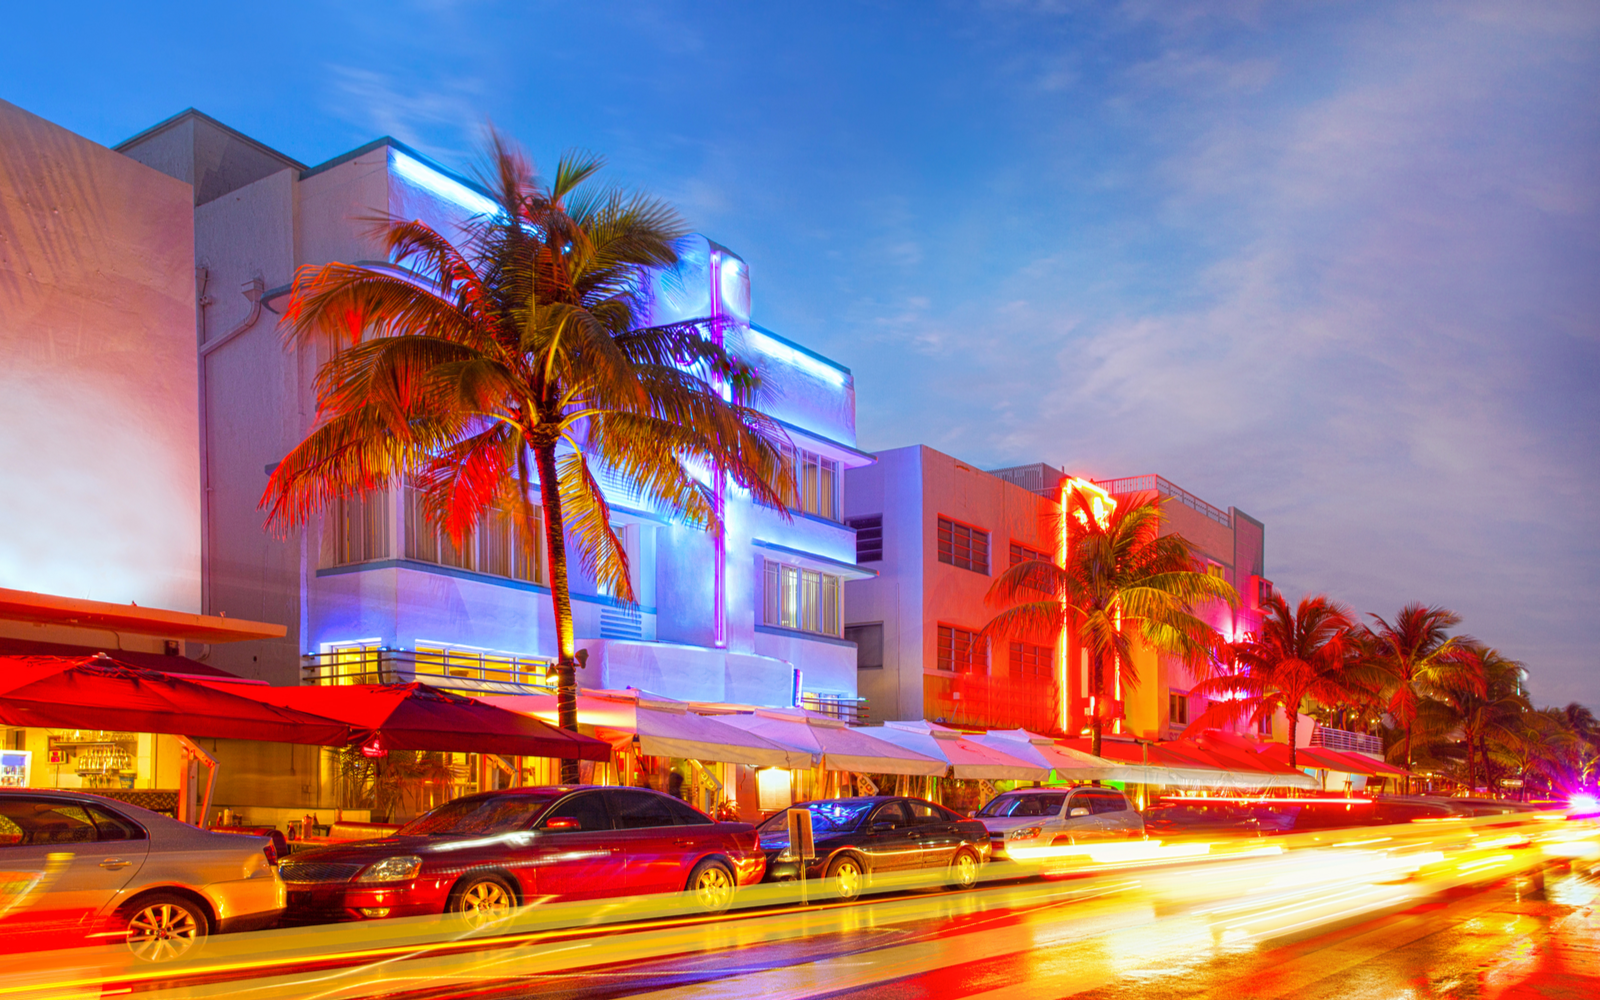 14 Best Hotels in Miami in 2022